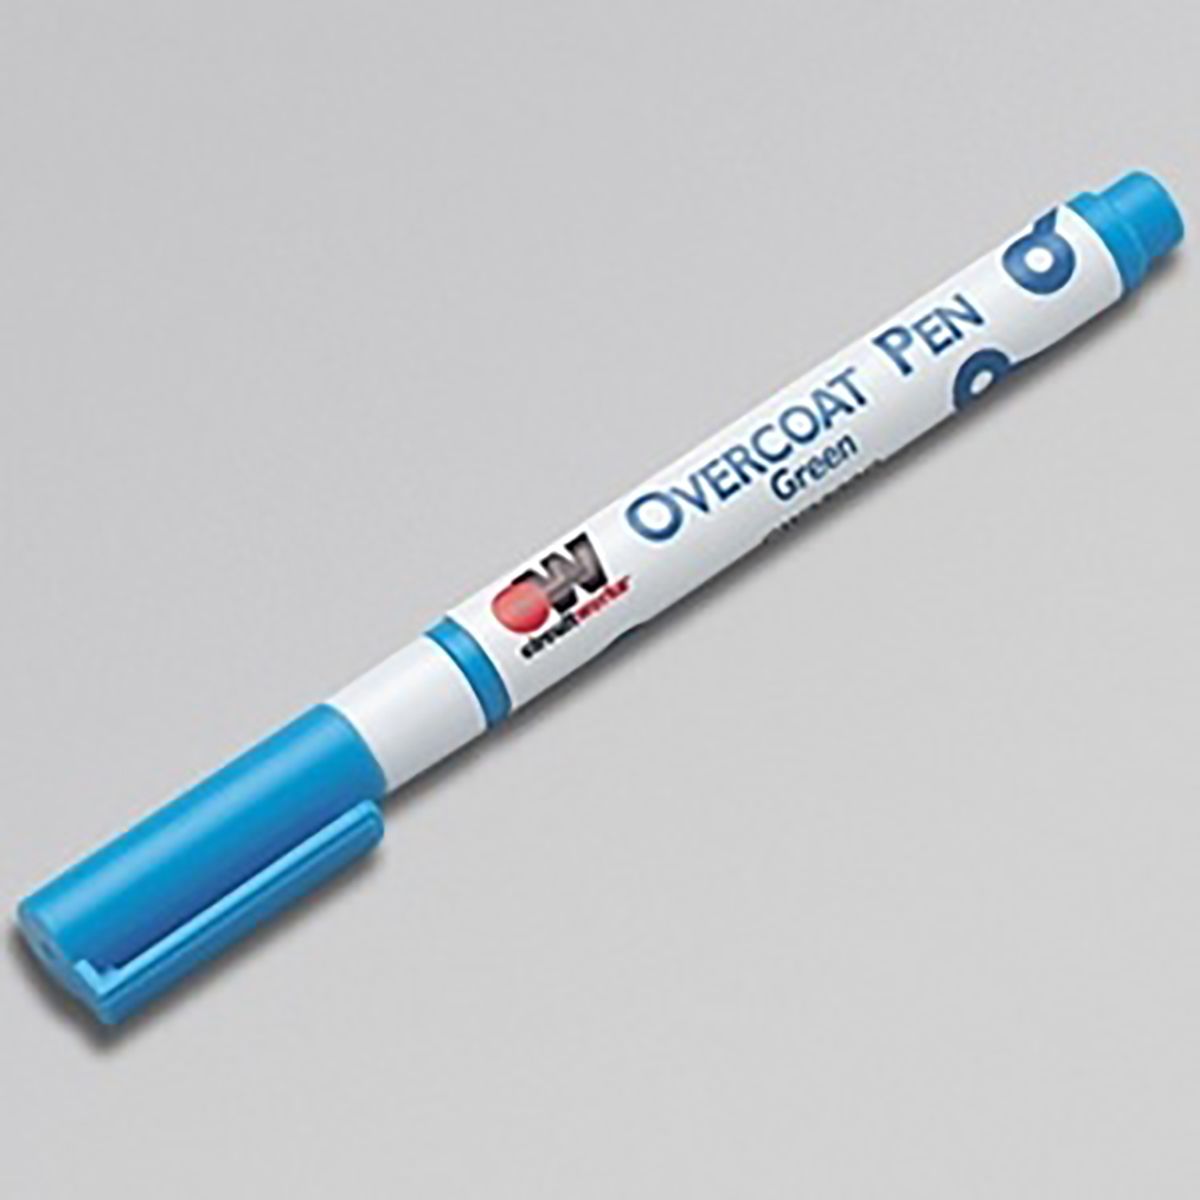 Chemtronics White Acrylic Conformal Coating, 4.9 g Pen, -55°C min, +125°C max